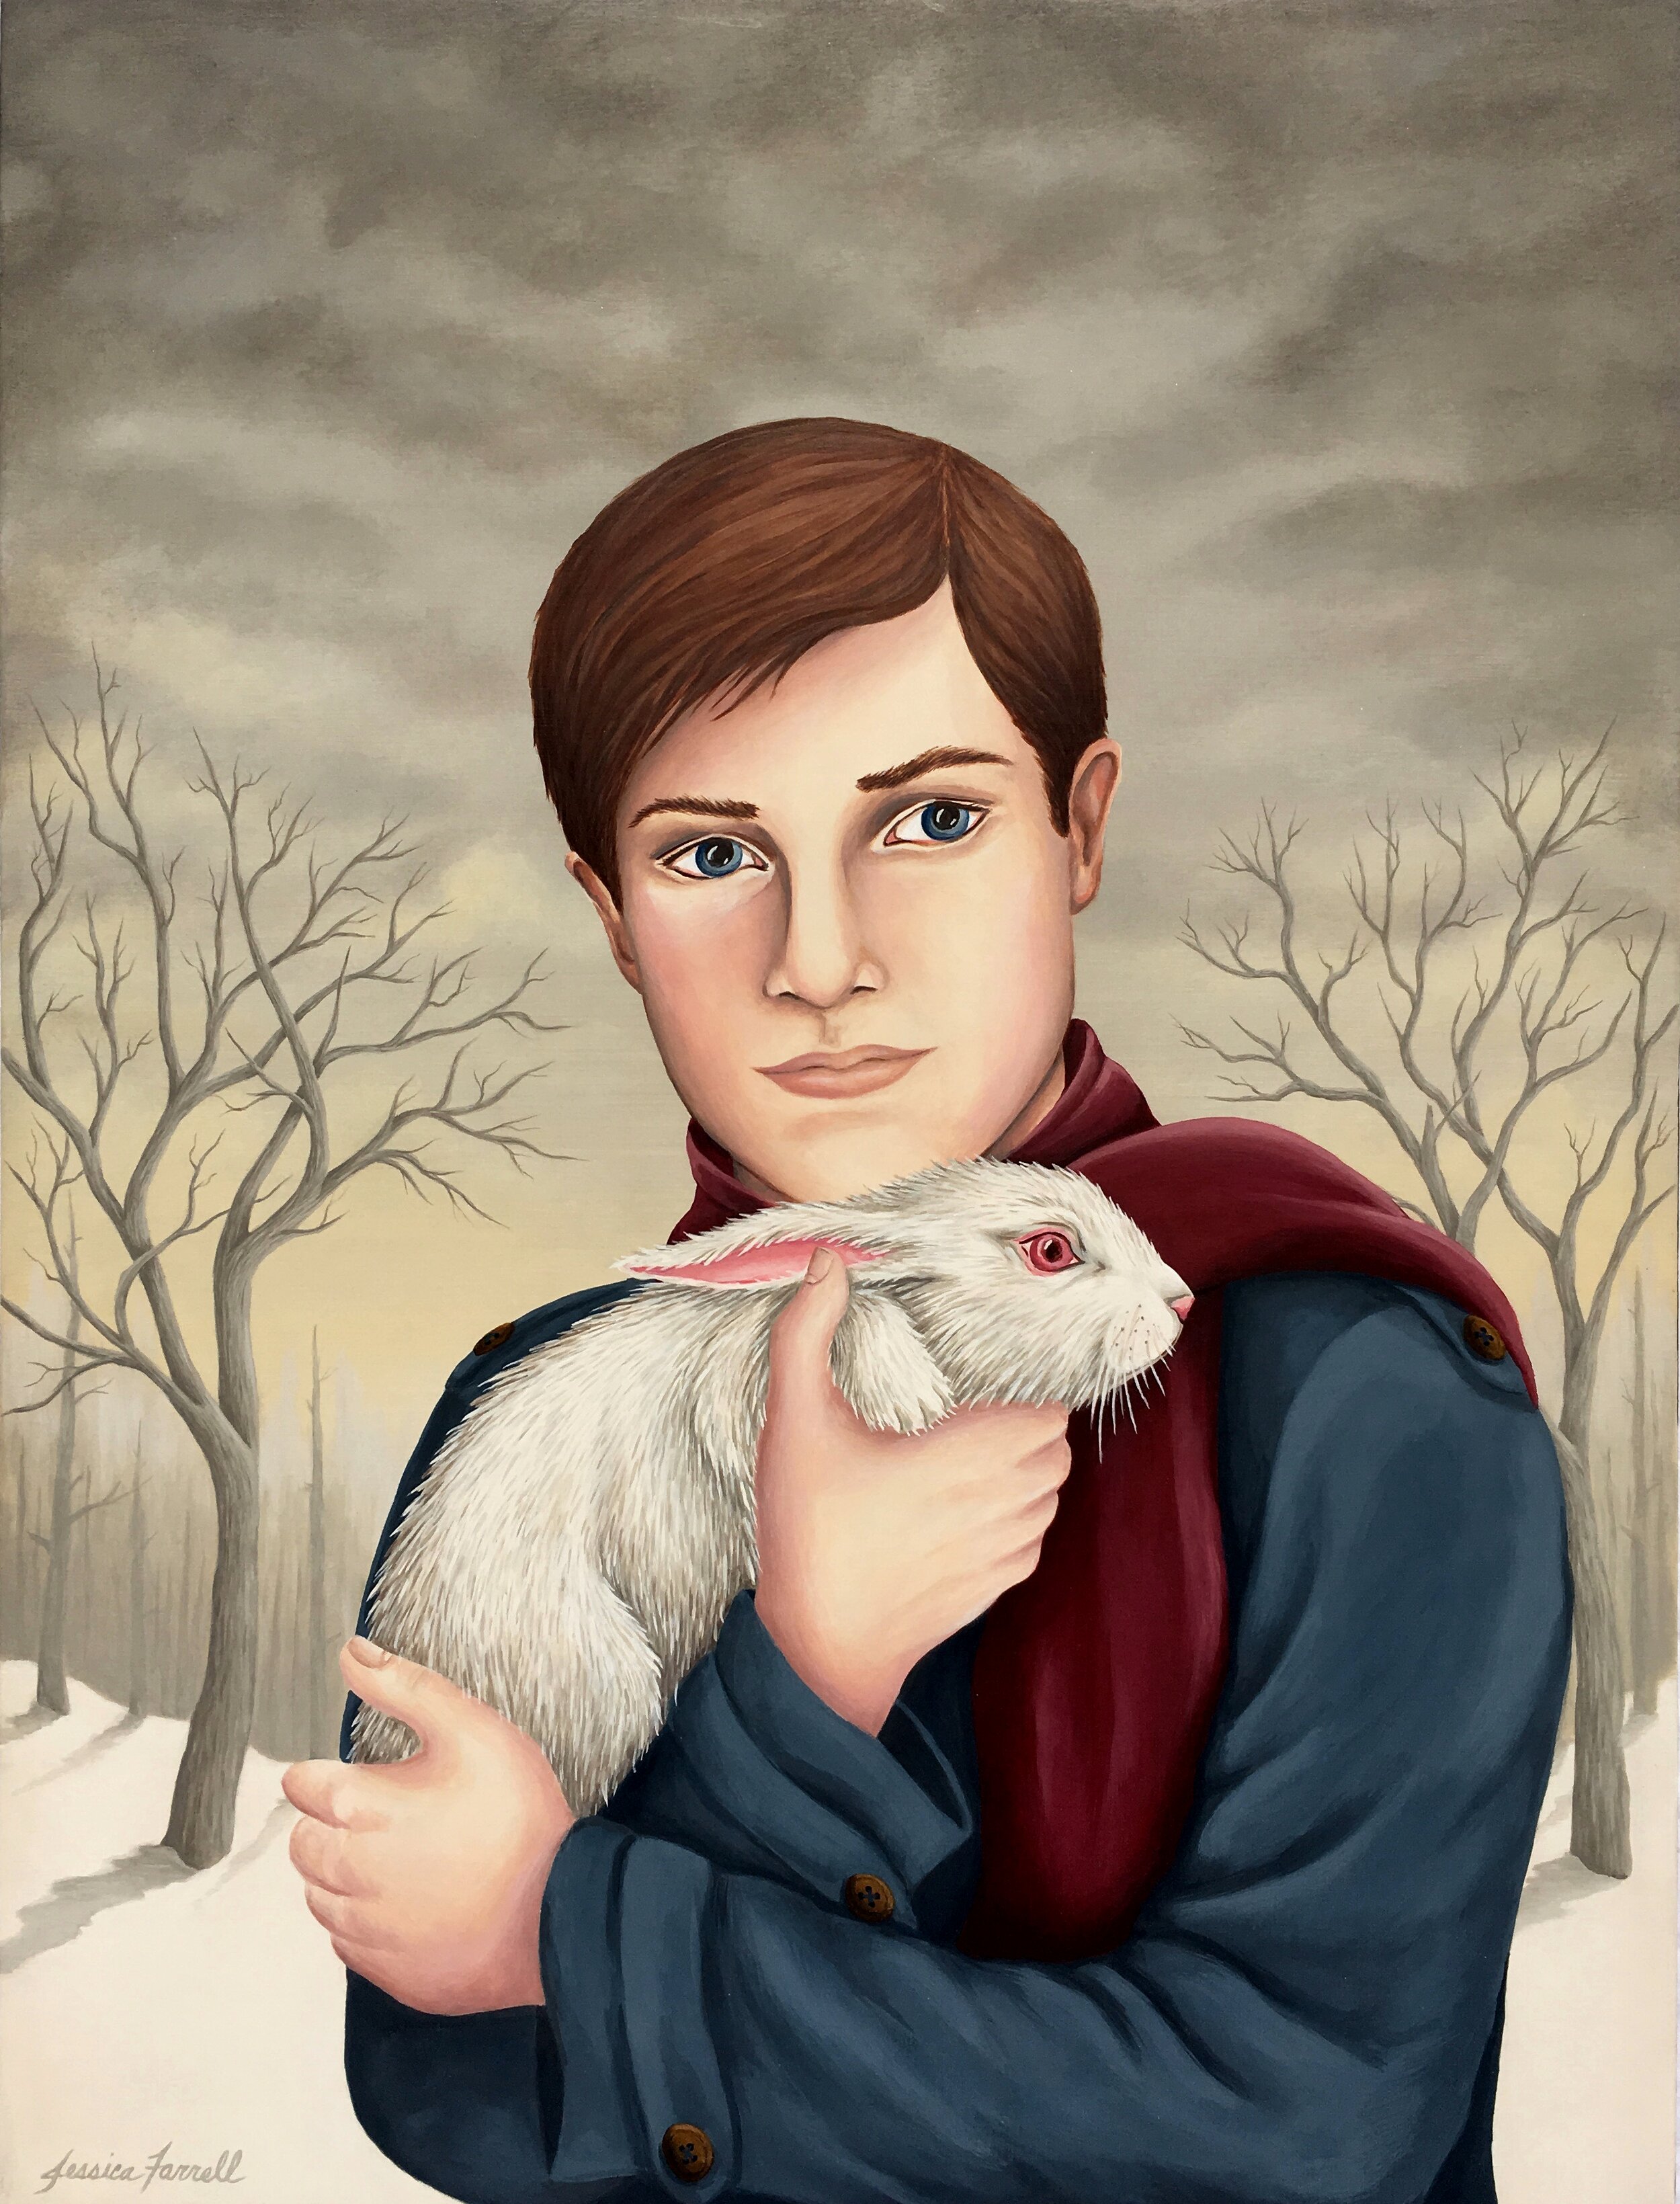   Jason &amp; White Rabbit , 2020  Acrylic on wood  24 x 18 inches (unframed)  27 ¼ x 21 ¼ inches (framed) 